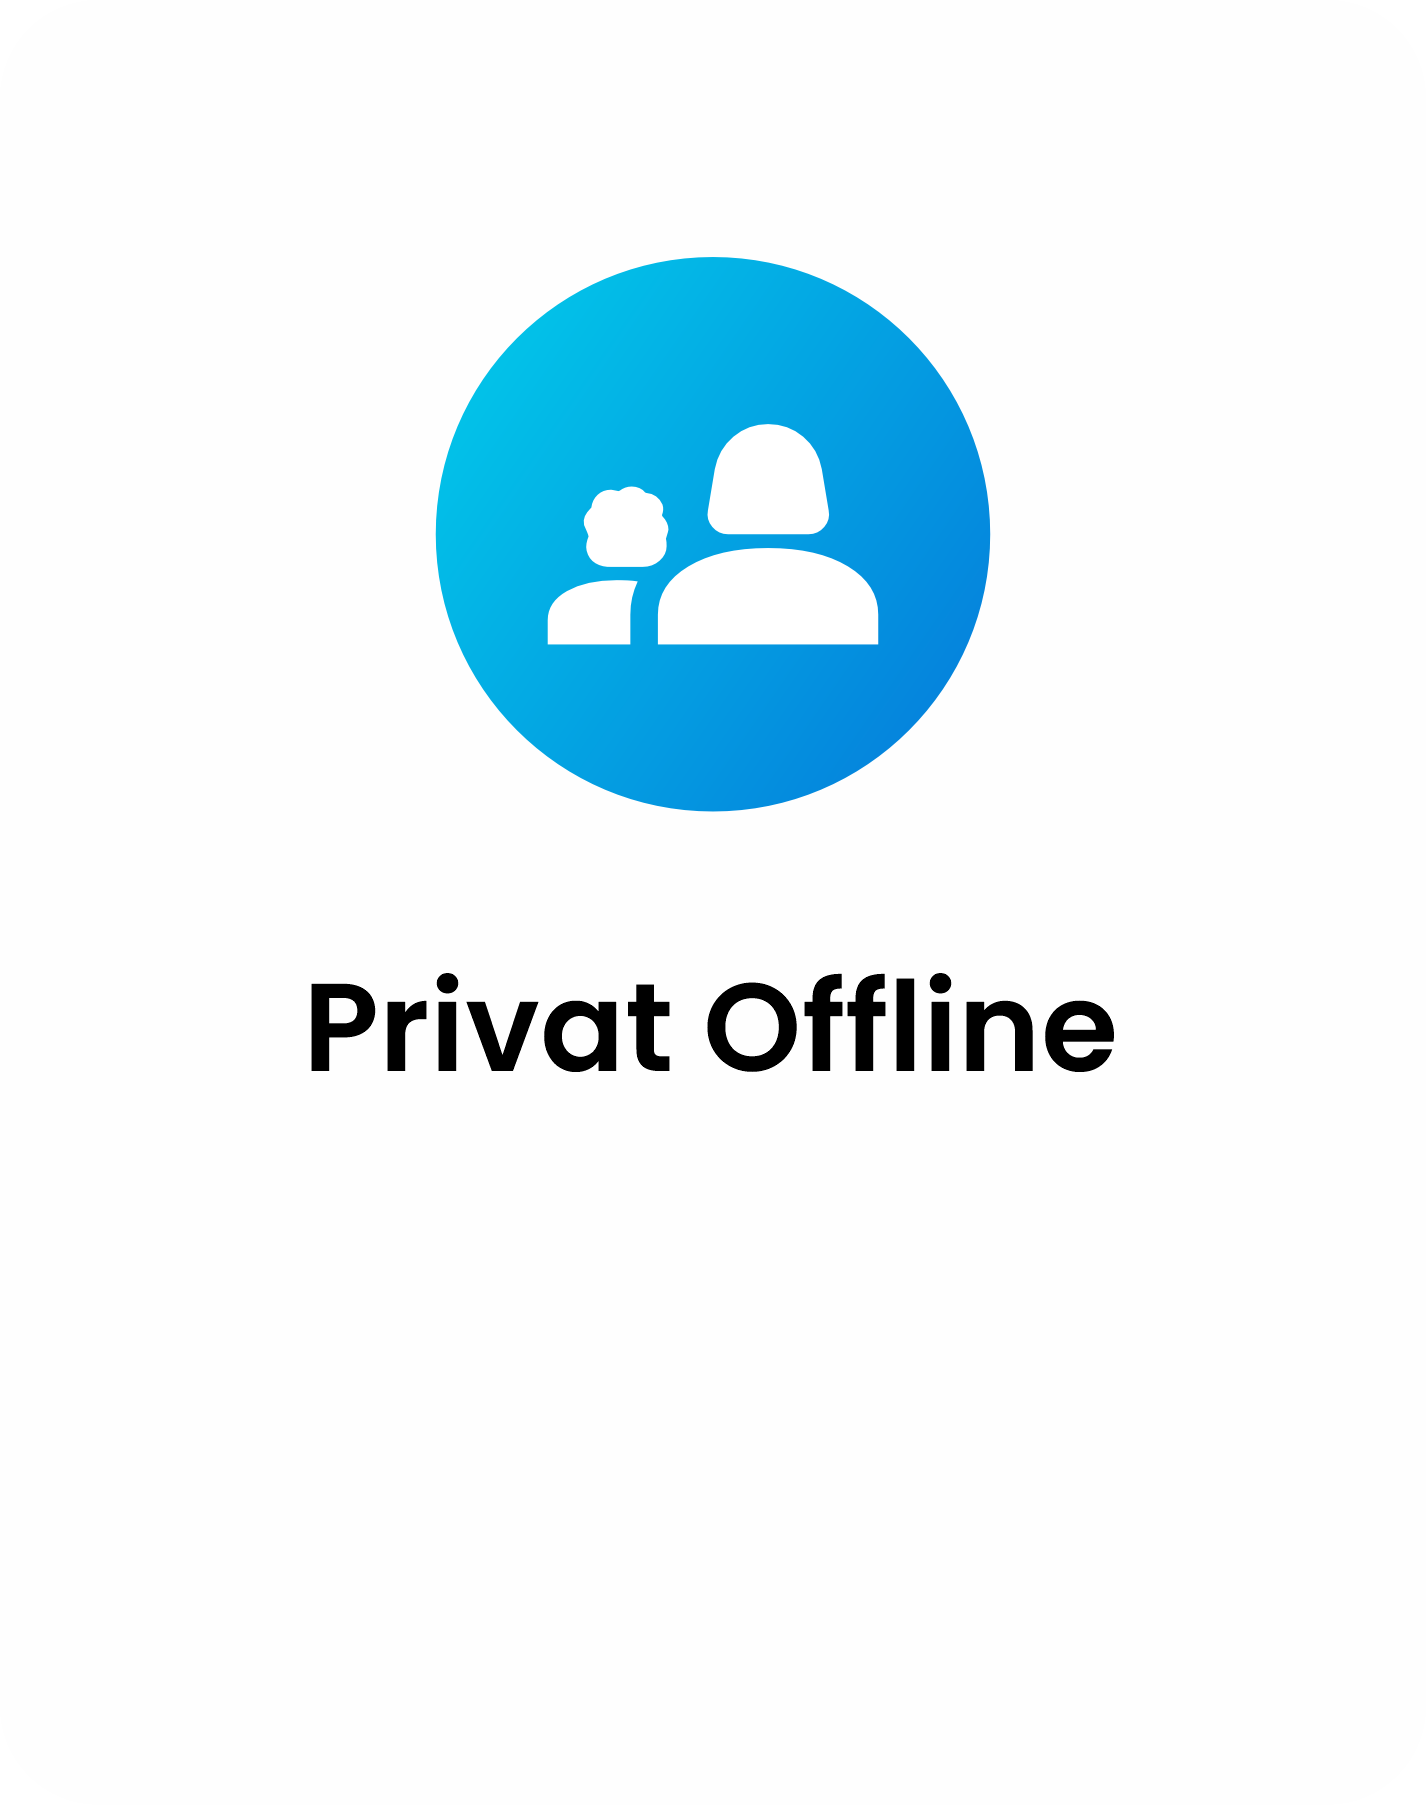 Privat_Offline